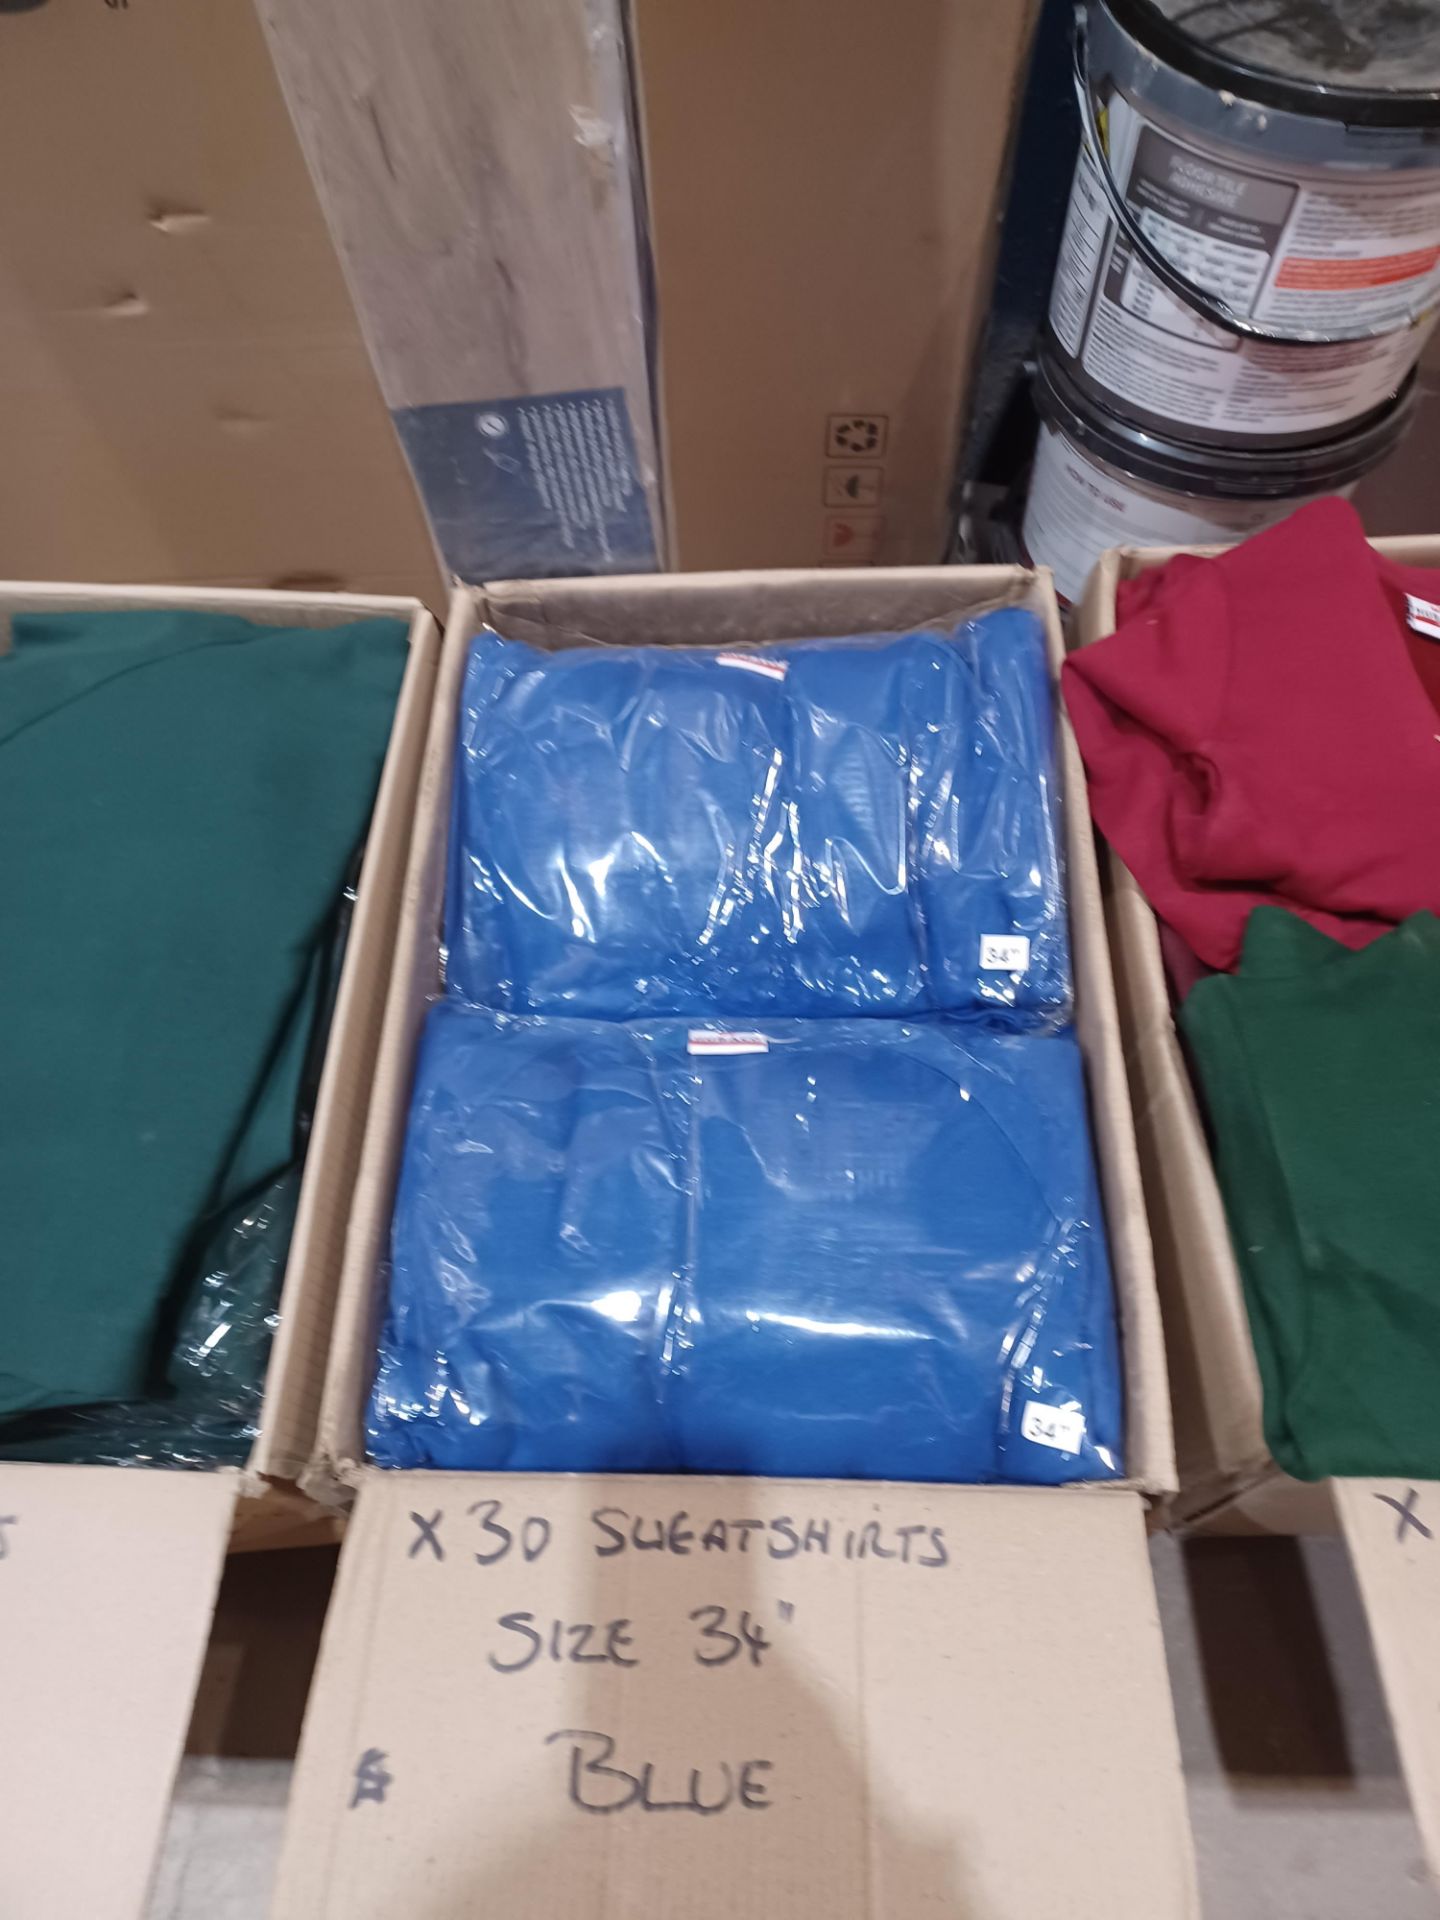 30 x Premium Soft Fleeced Sweatshirts in Size 34" - R14. RRP £14.51 each